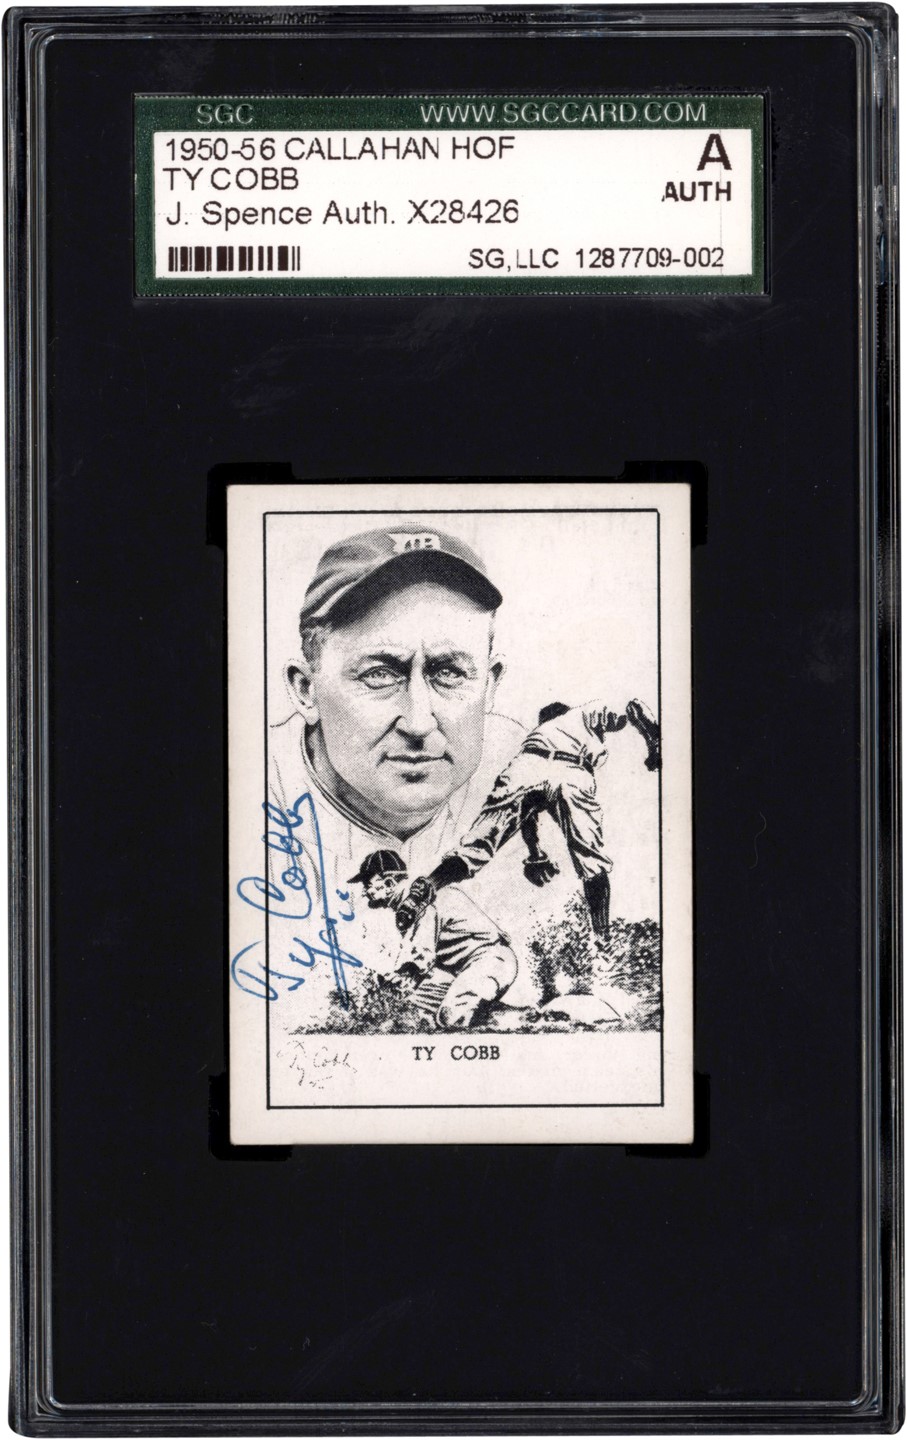 - 1950-56 Callahan Hall of Fame Ty Cobb Signed (SGC & JSA)